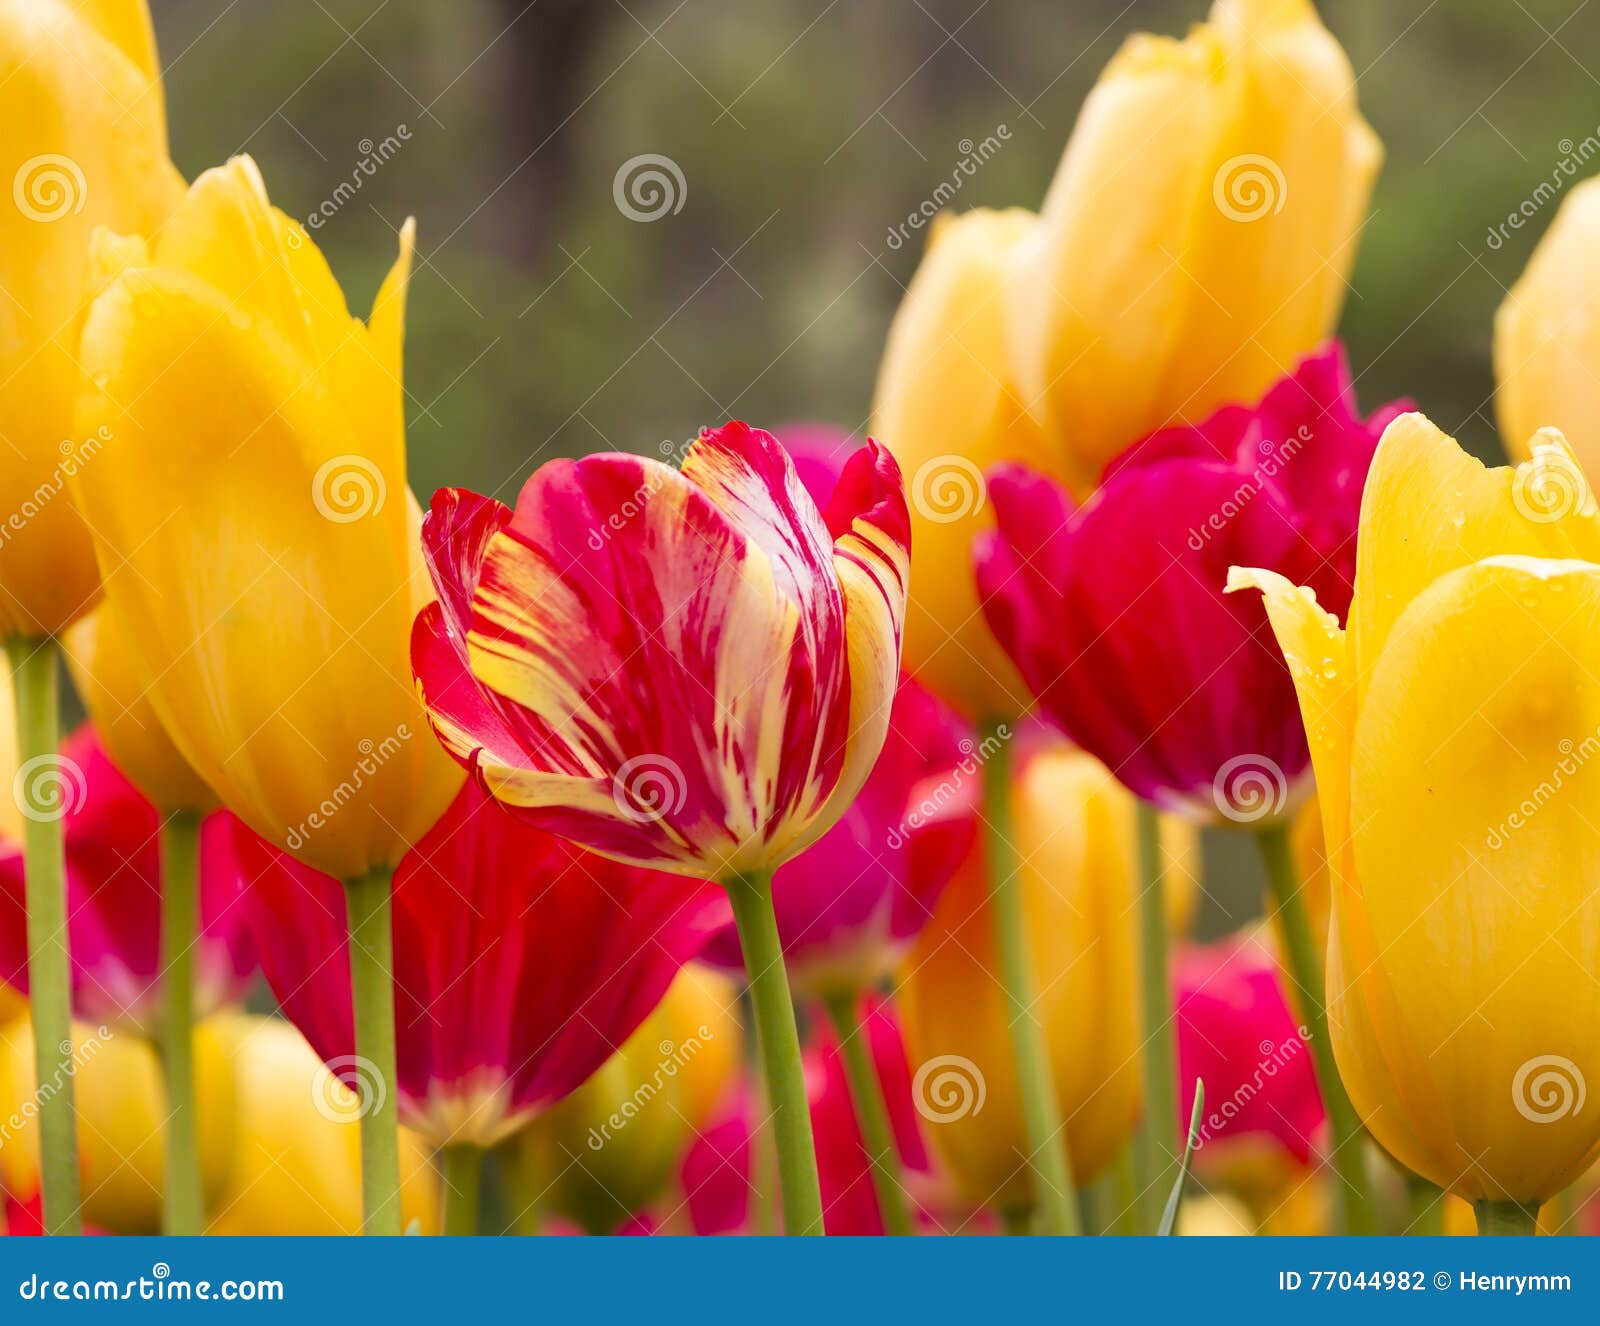 red and yellow tulips, araluen botanic park, perth, australia